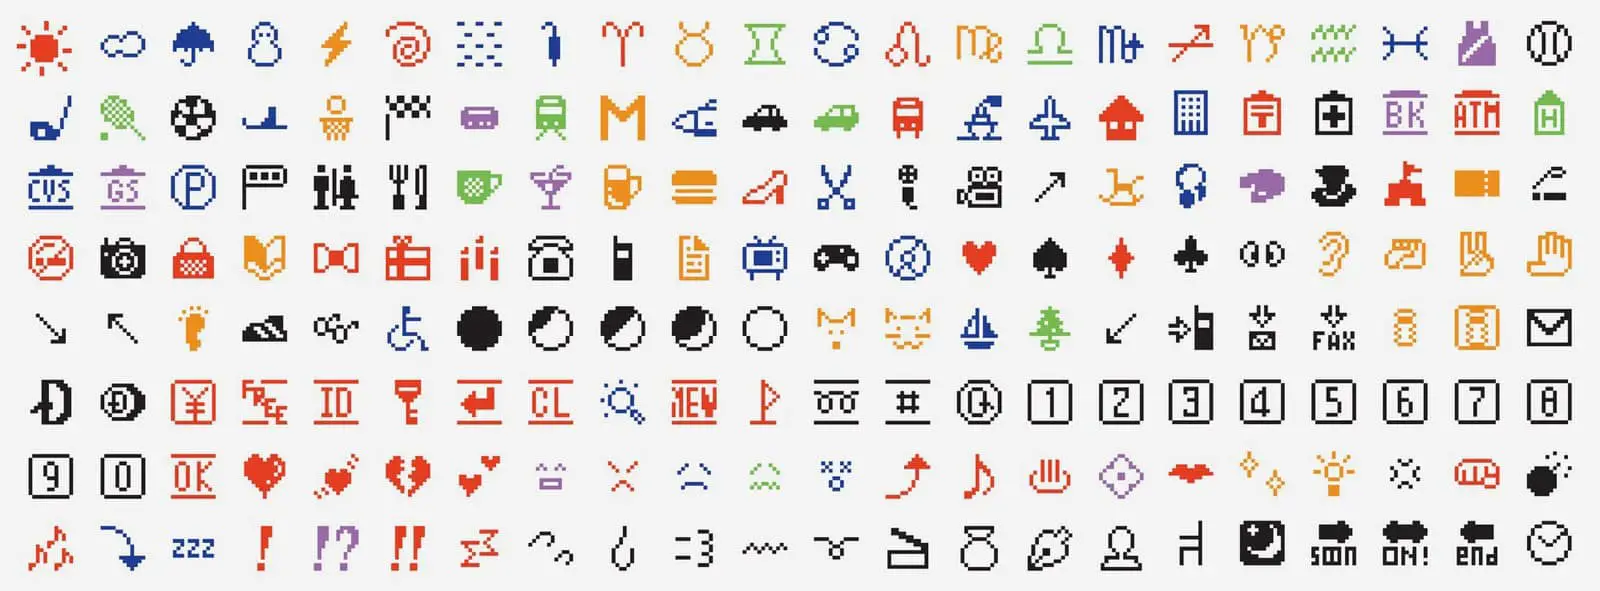 Copy paste emojis 😍 Emoji